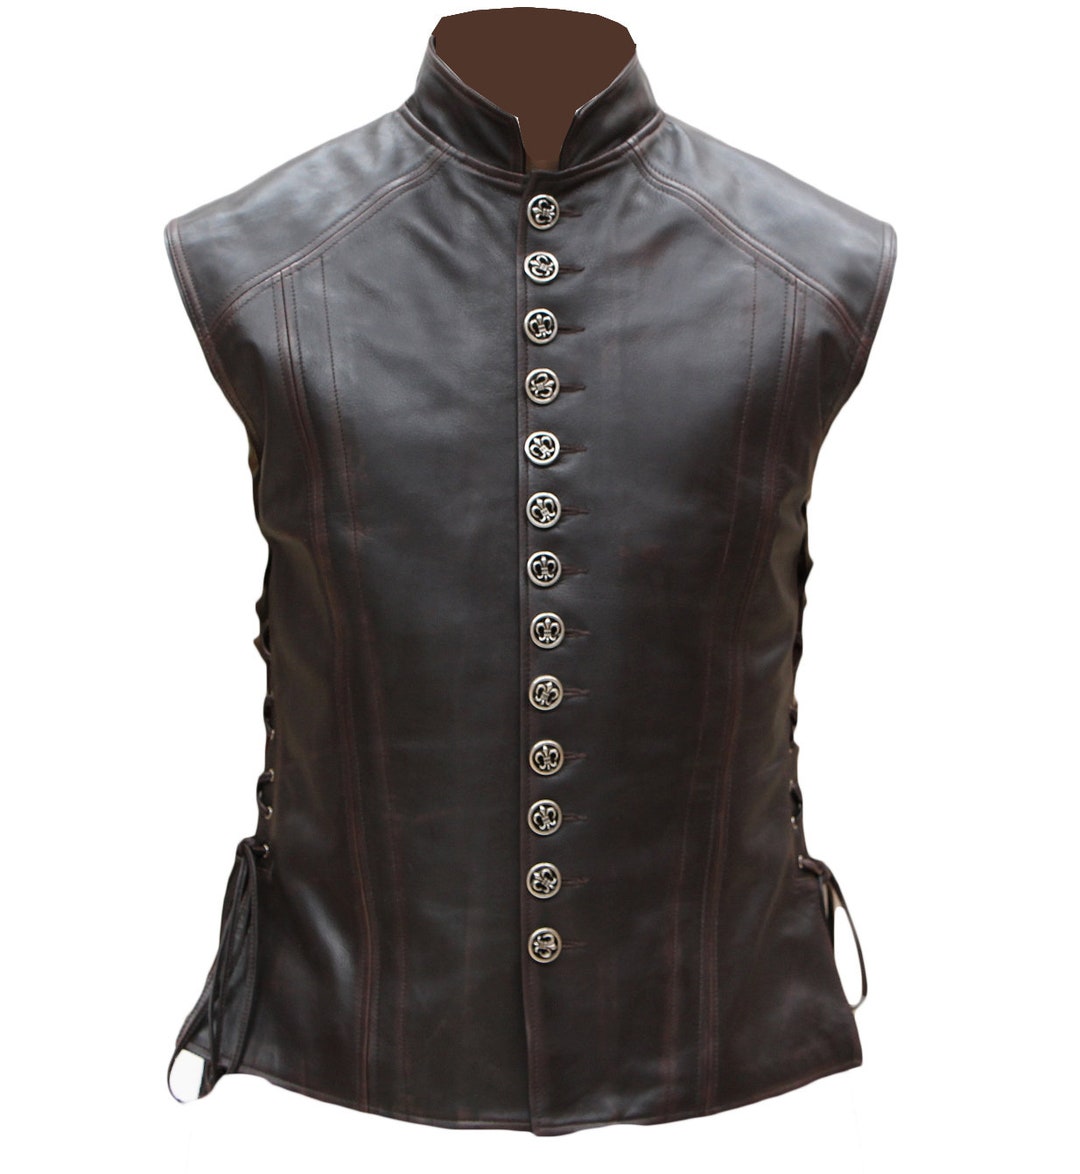 Handmade Men's Vintage Renaissance Leather Vest - Etsy